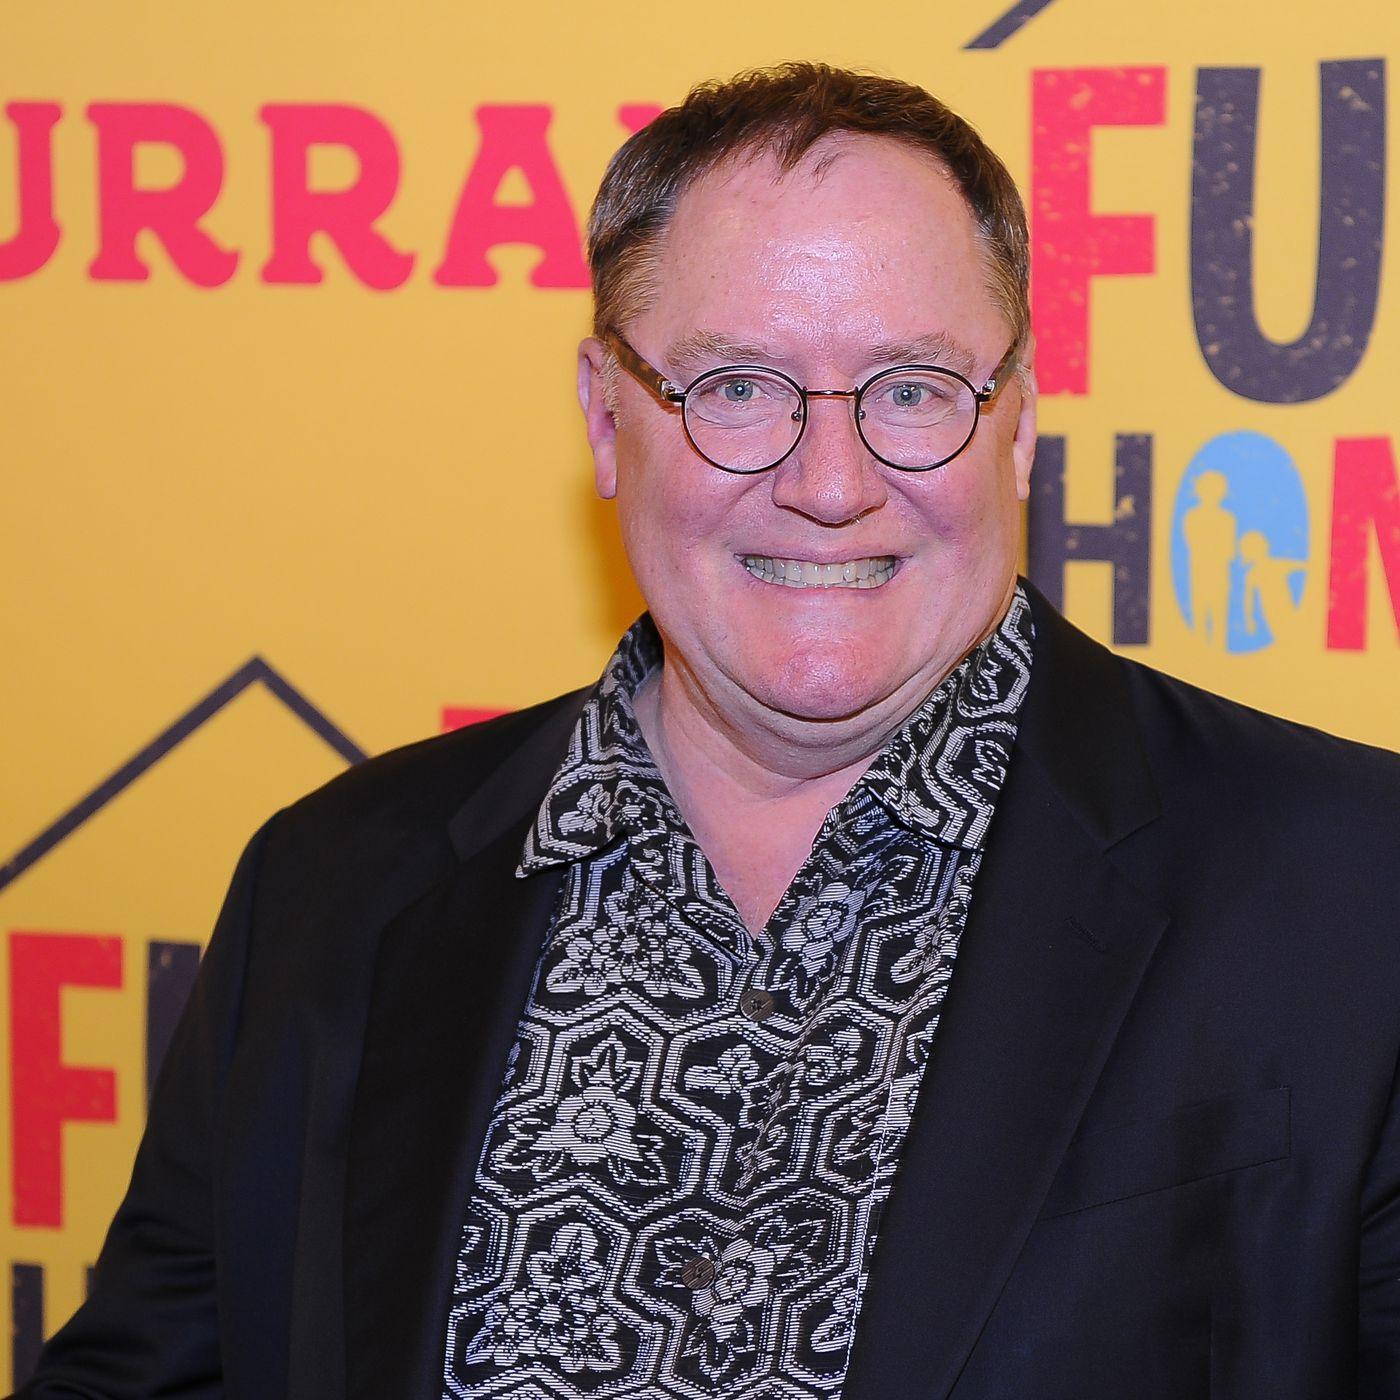 Pixar chief John Lasseter to exit studio after misconduct